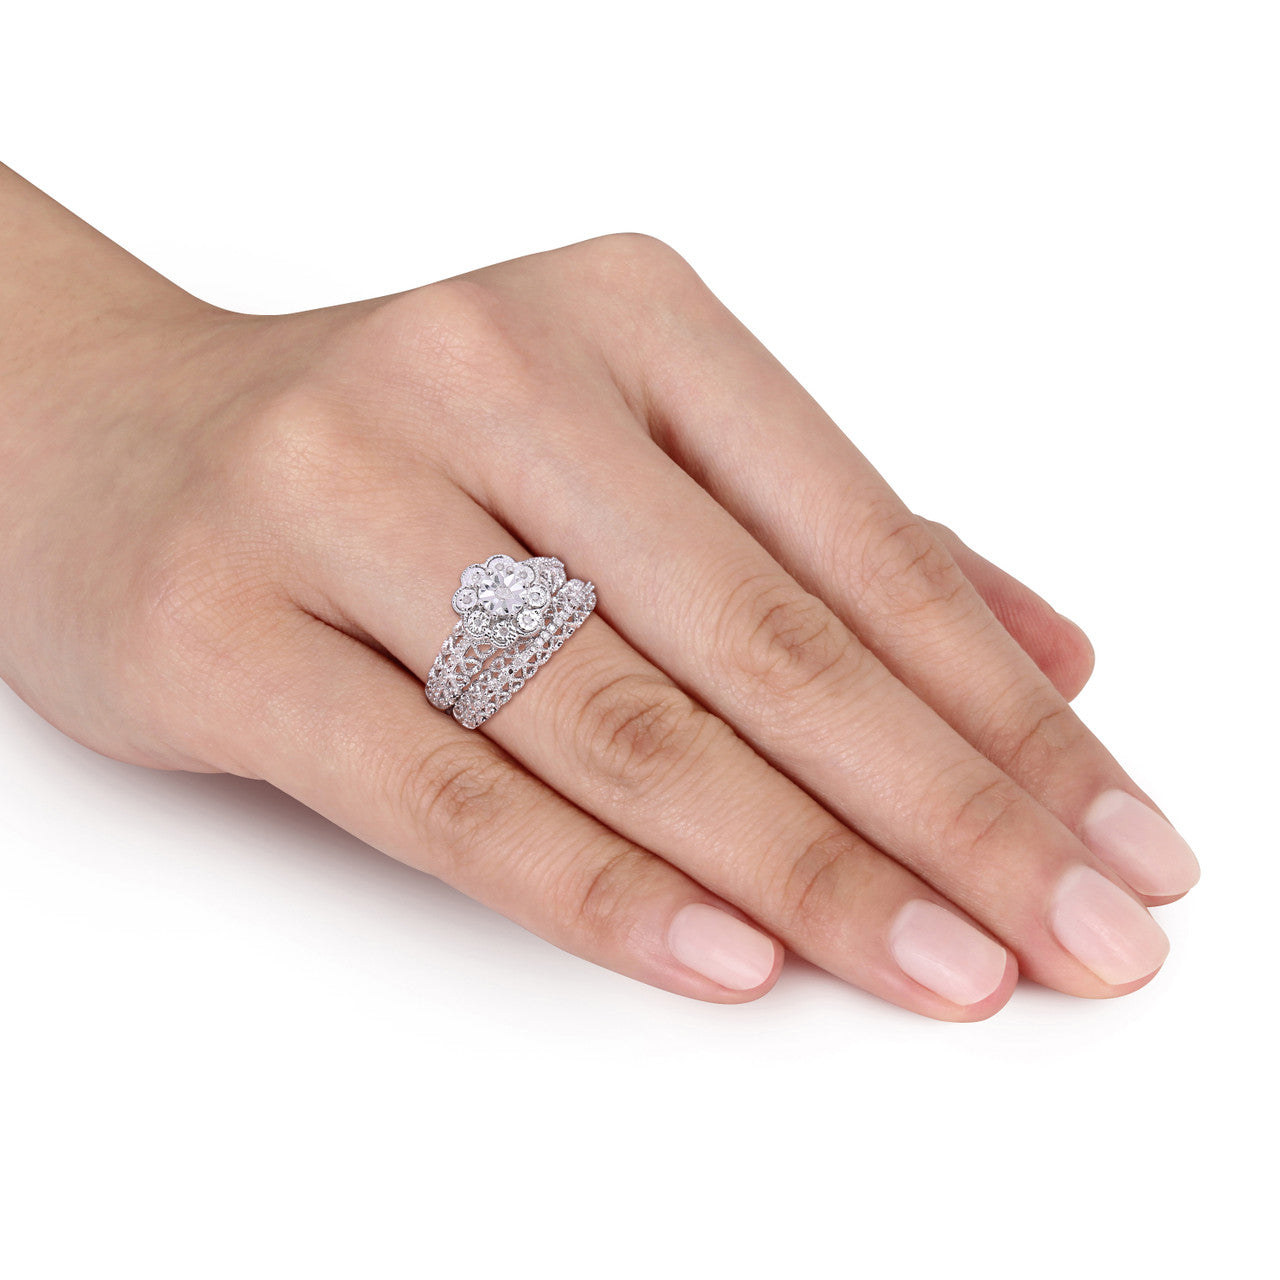 Ice Jewellery 1/6 CT TDW Diamond Flower Bridal Set Ring in Sterling Silver - 75000005409 | Ice Jewellery Australia